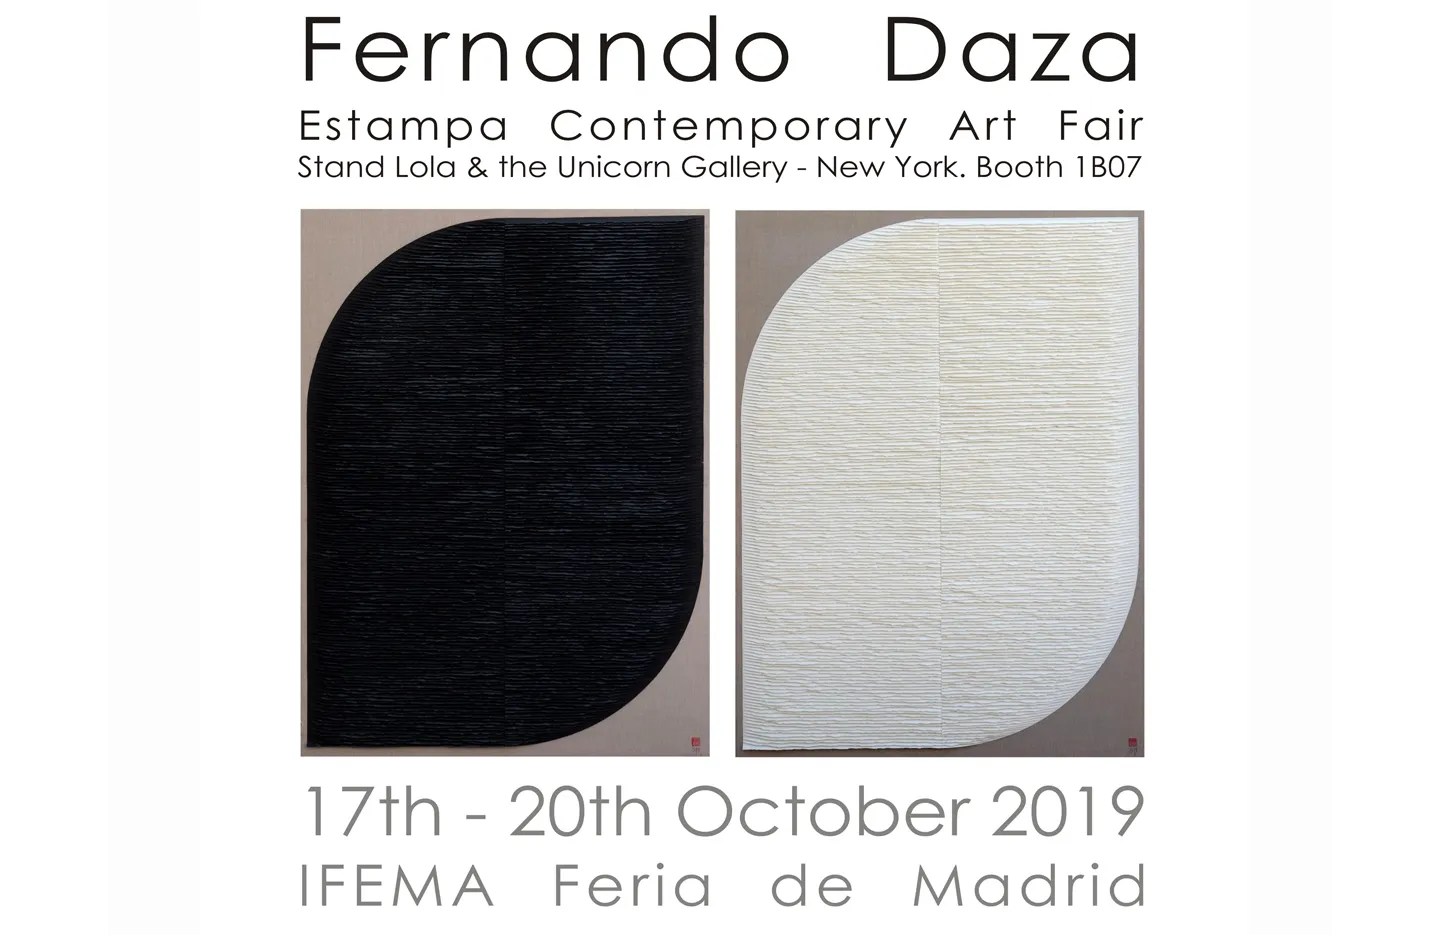 Fernando Daza Visual Artist - evento 2019 estampa contemporary